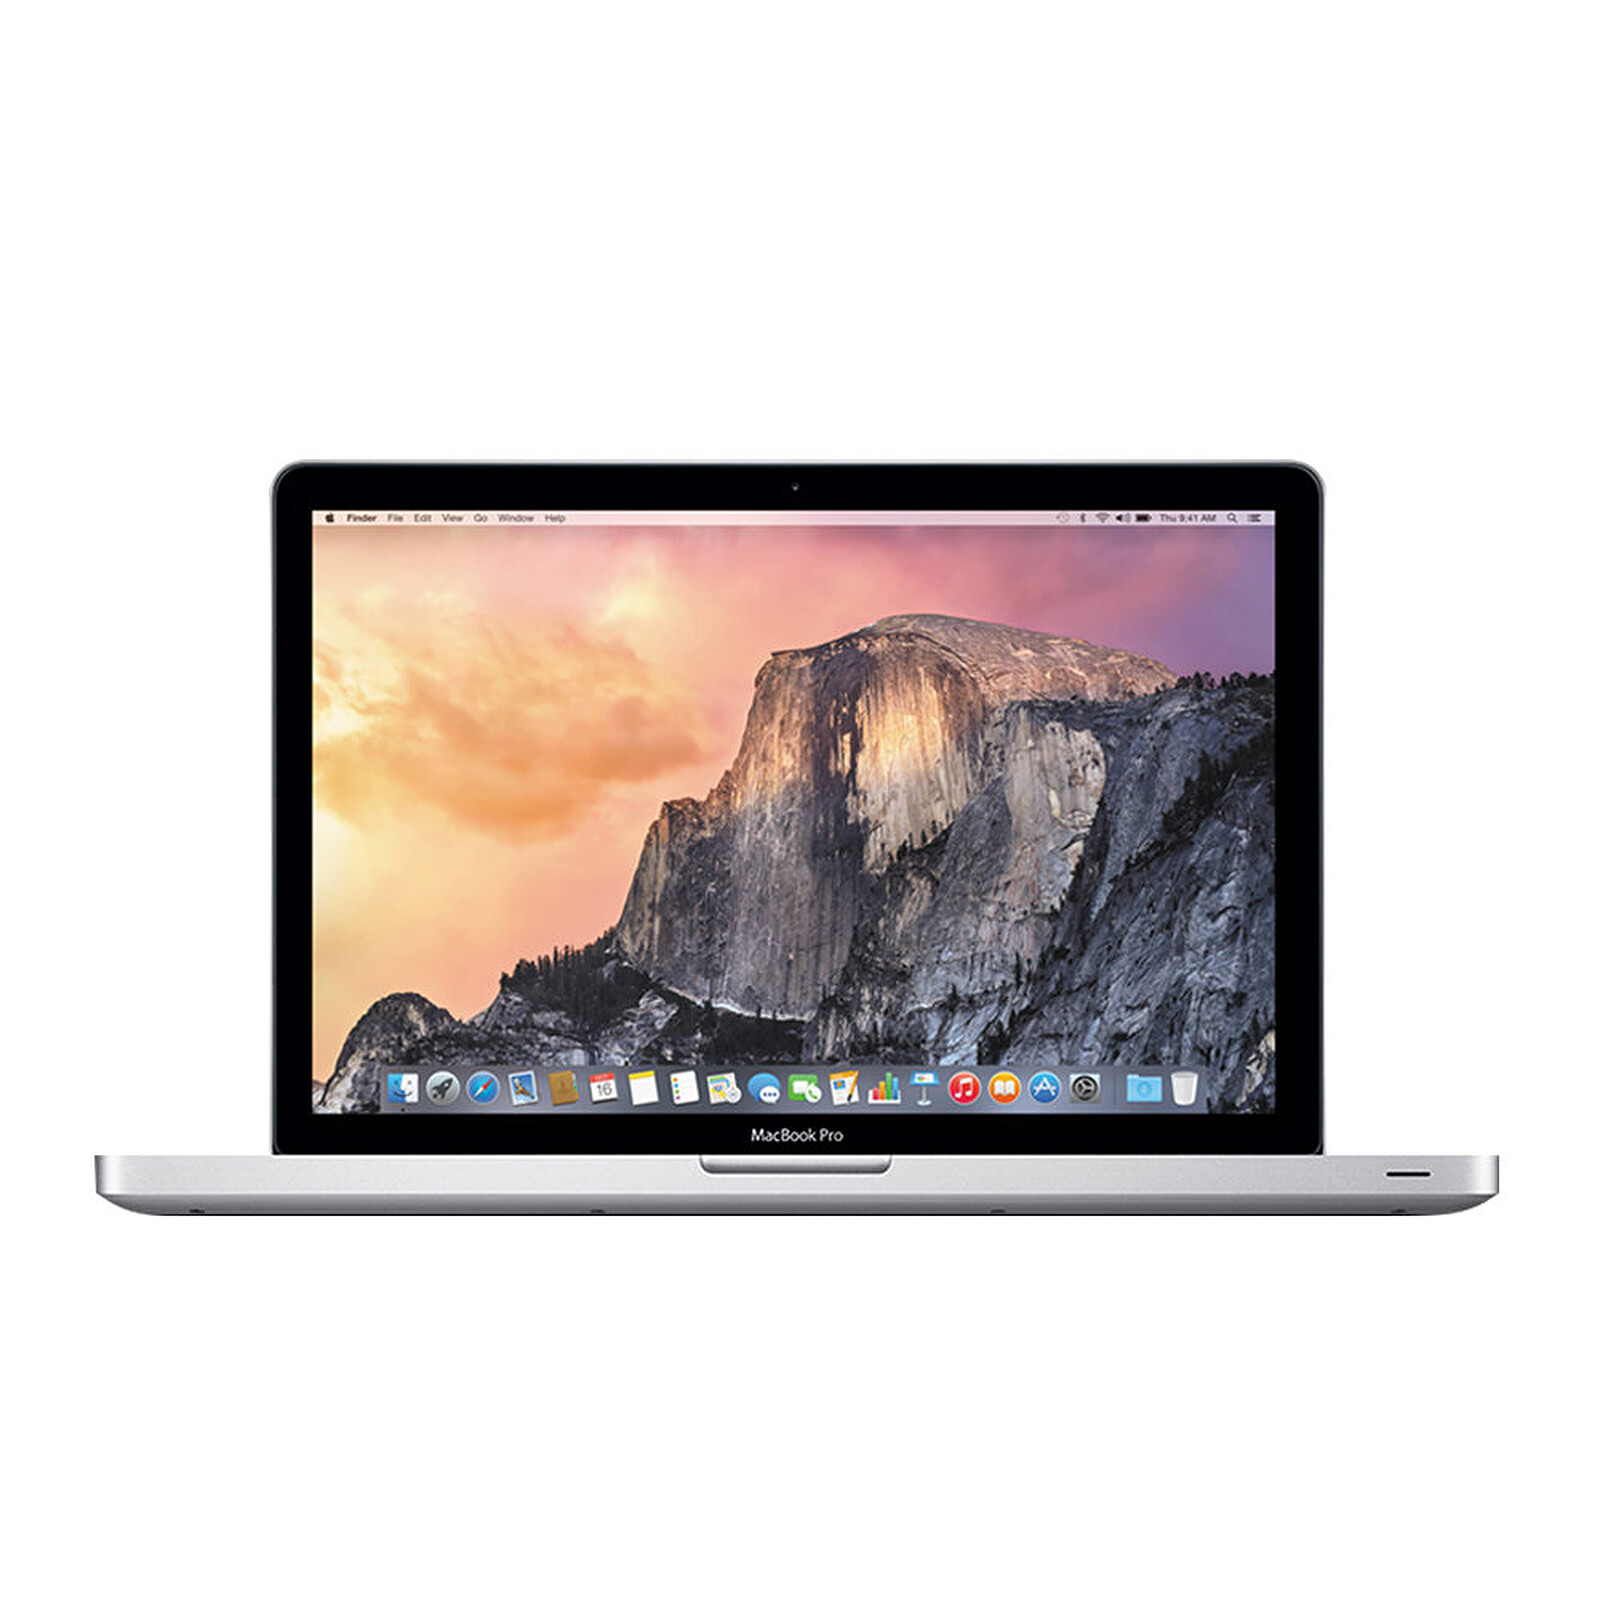 Apple MacBook Pro 15 - 2,4 Ghz - 16 Go RAM - 500 Go HDD (2011) (MD322LL/A)  · Reconditionné - MacBook reconditionné - LDLC